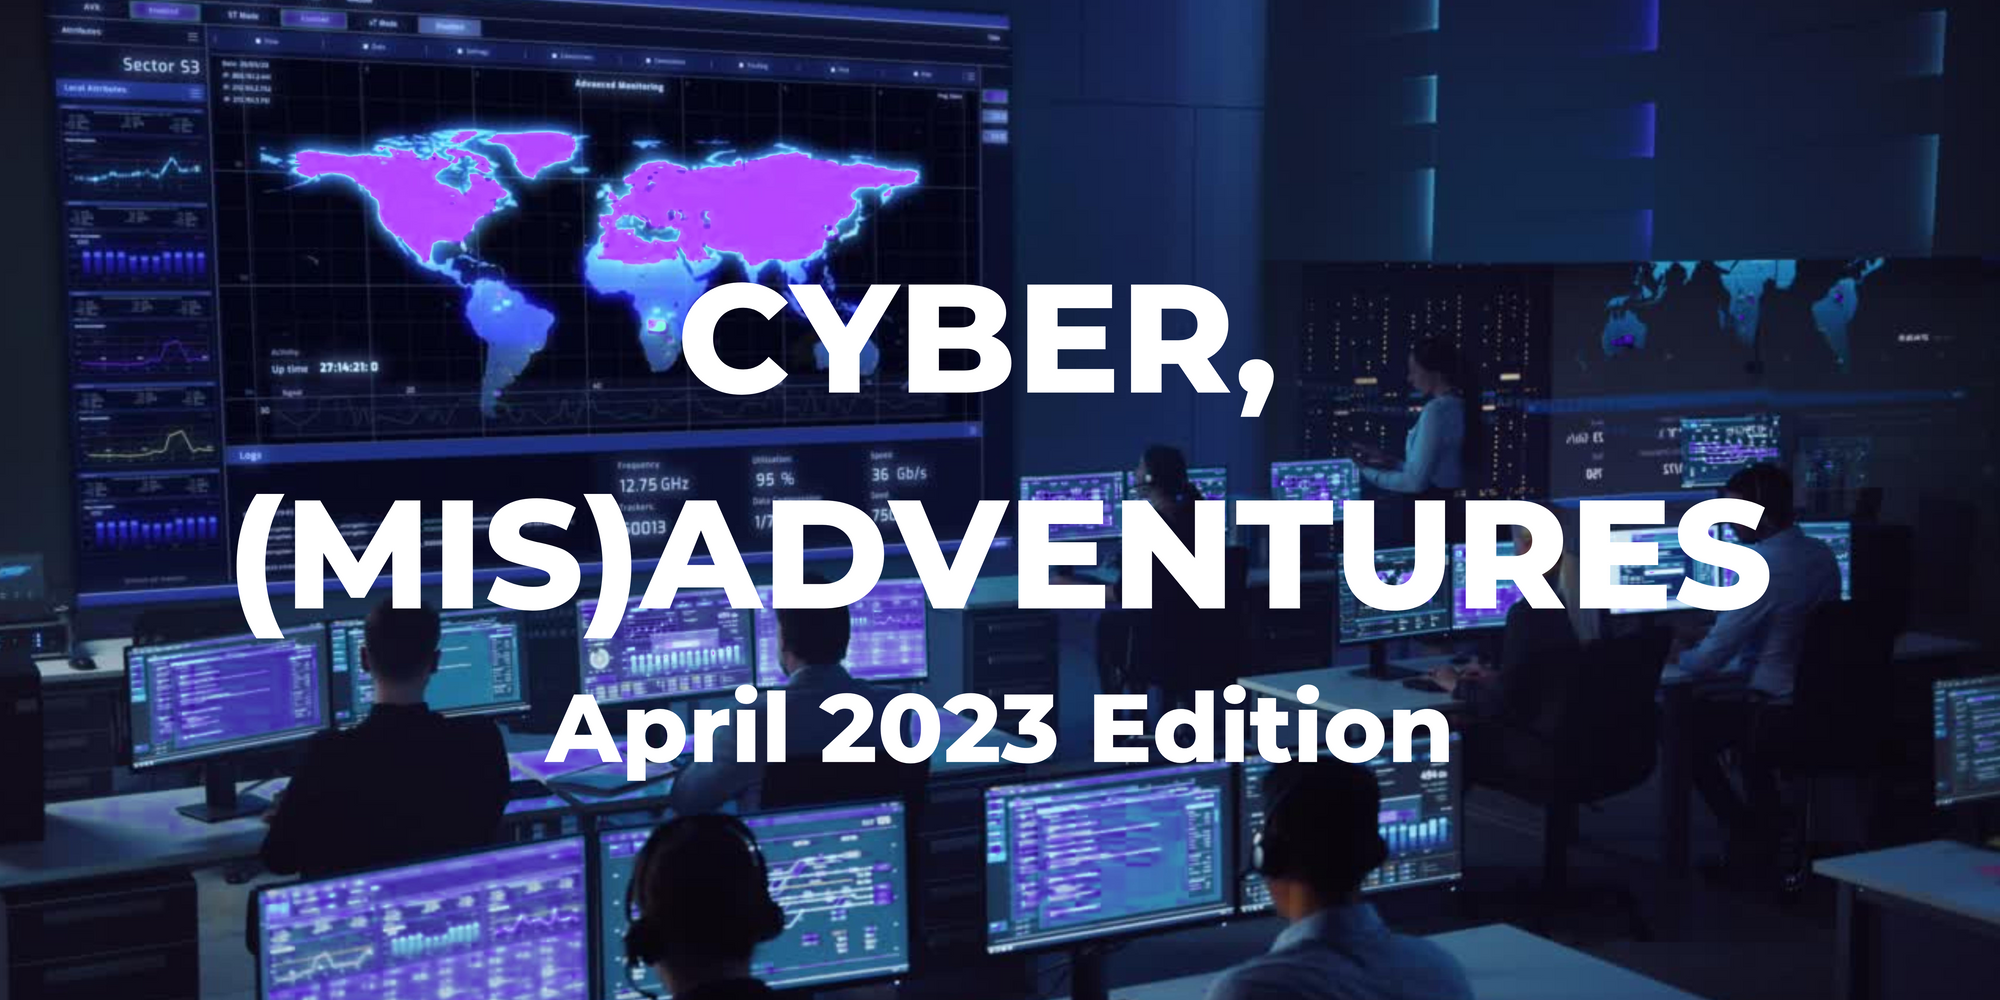 Cyber, (Mis)adventures #1 April 2023 Edition